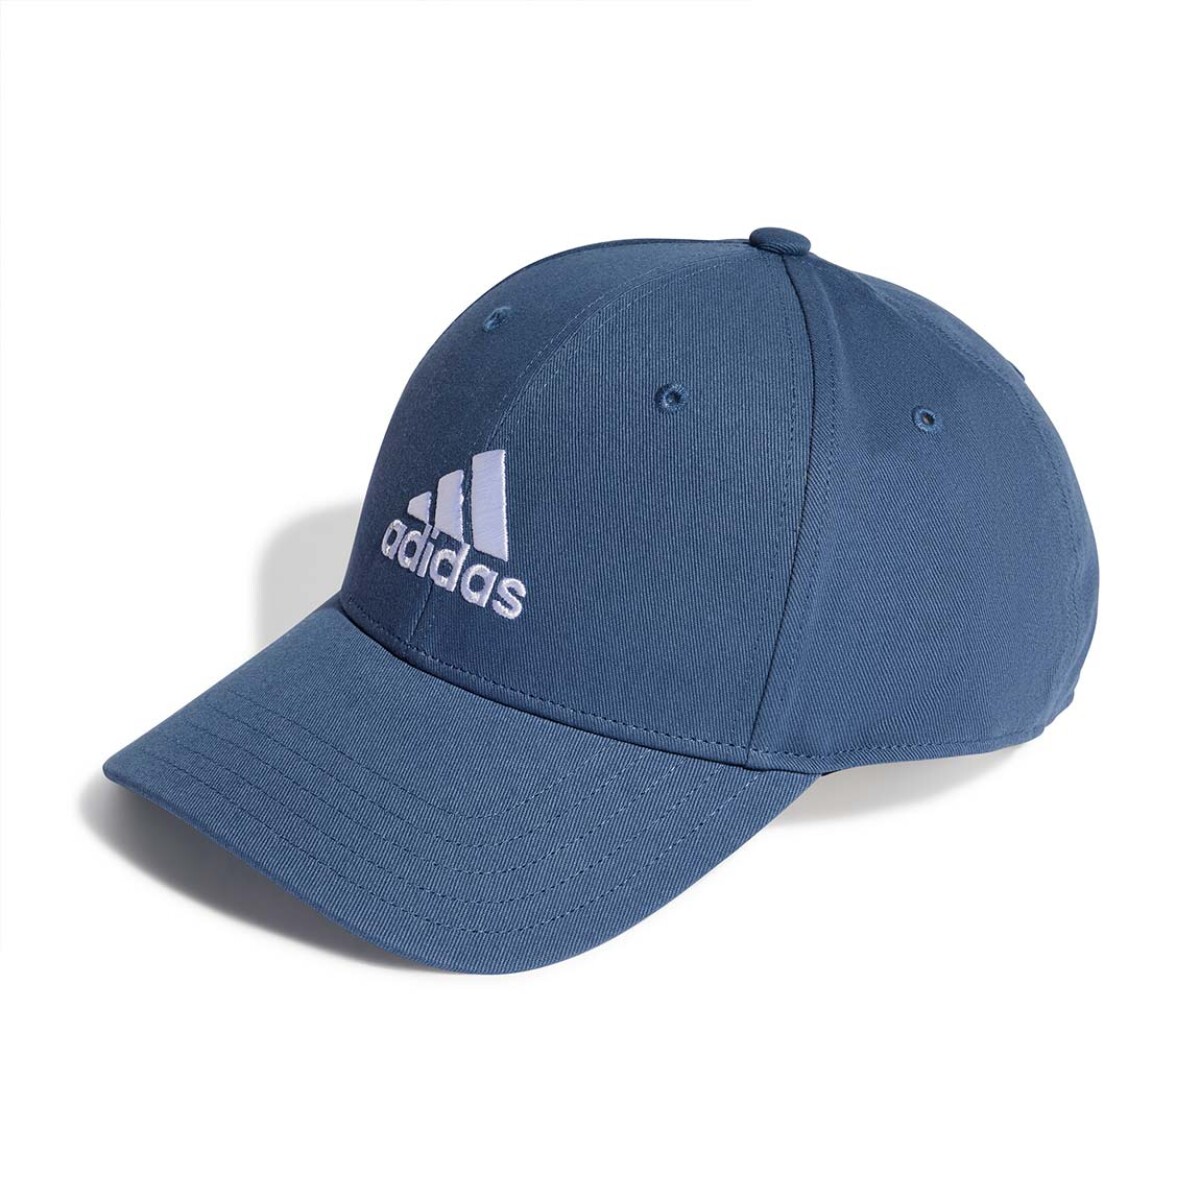 Adidas Bball Cap Cot - Azul-blanco 